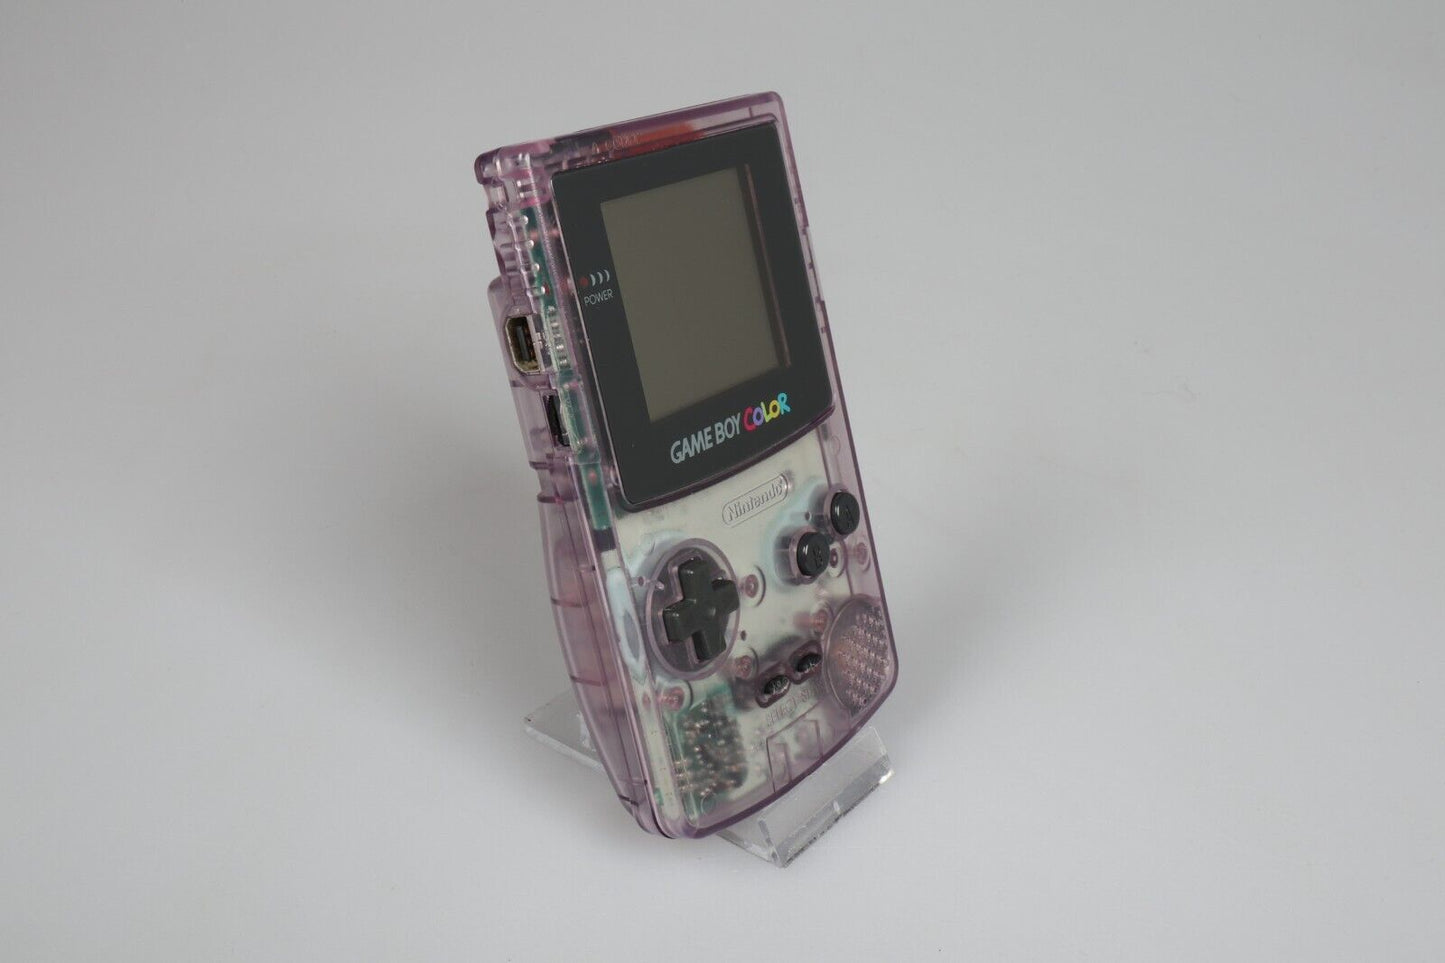 Gameboy Color | CGB-001 Transparent Handheld | Atomic Purple